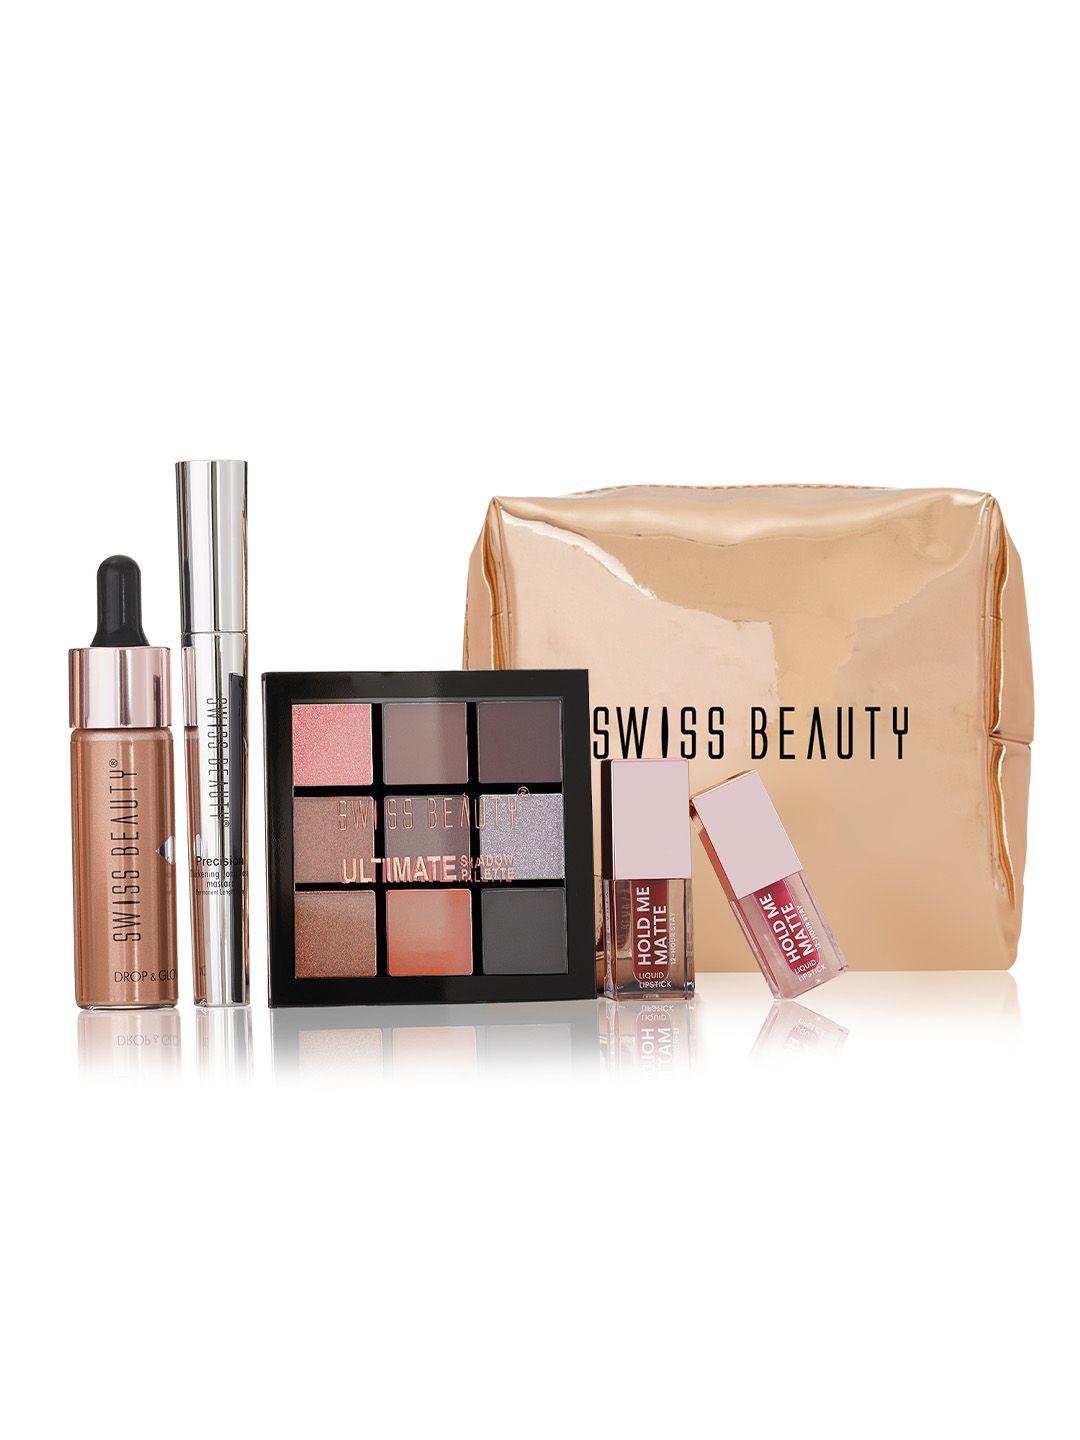 swiss beauty glam up makeup gift kit